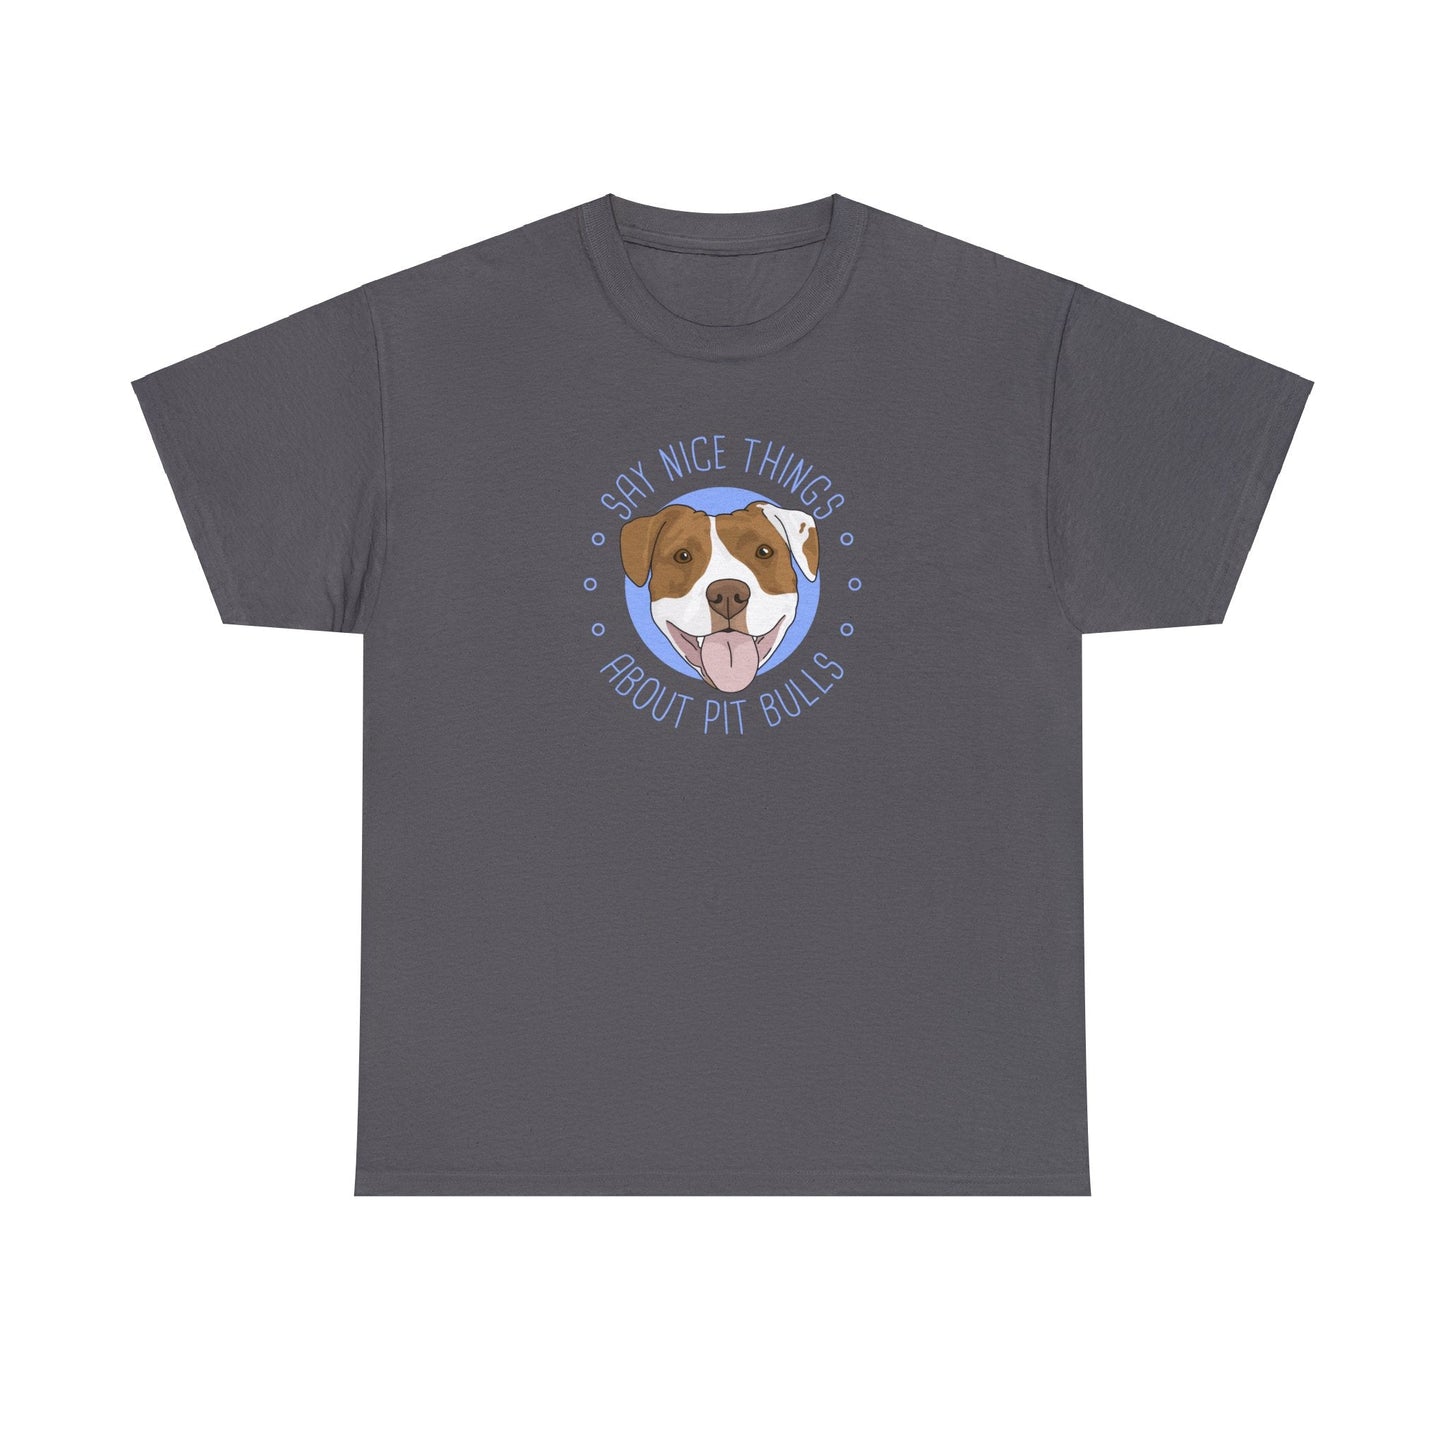 Say Nice Things About Pit Bulls | T-shirt - Detezi Designs-83970426398090357200